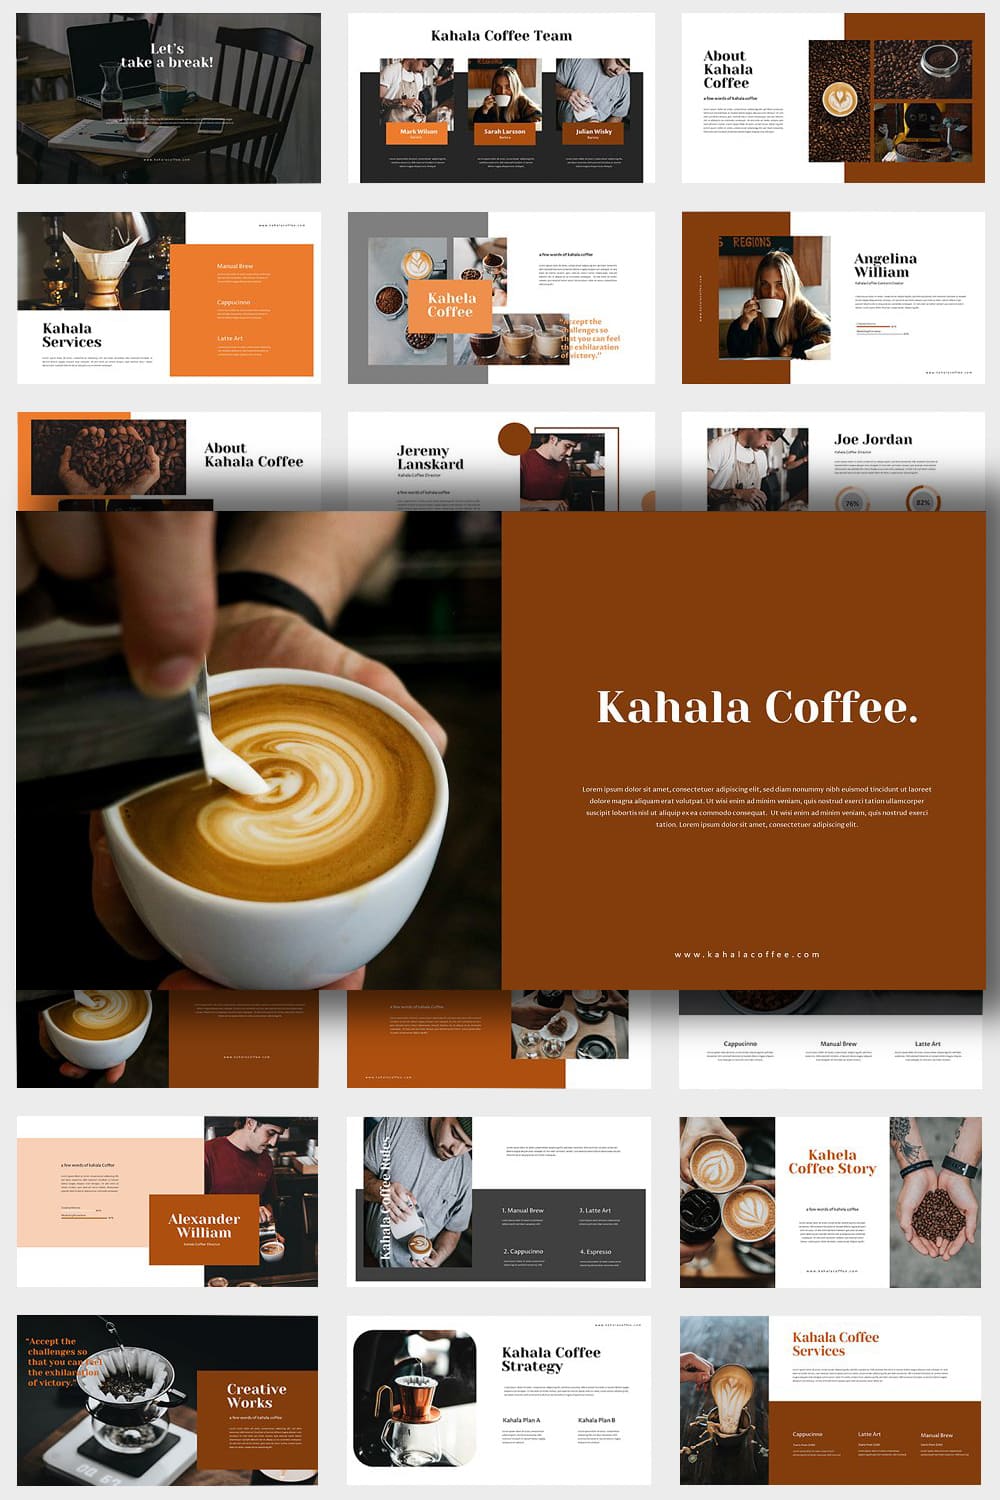 Kahala - Coffee Google Slides has a professional, ultra-modern and unique design.